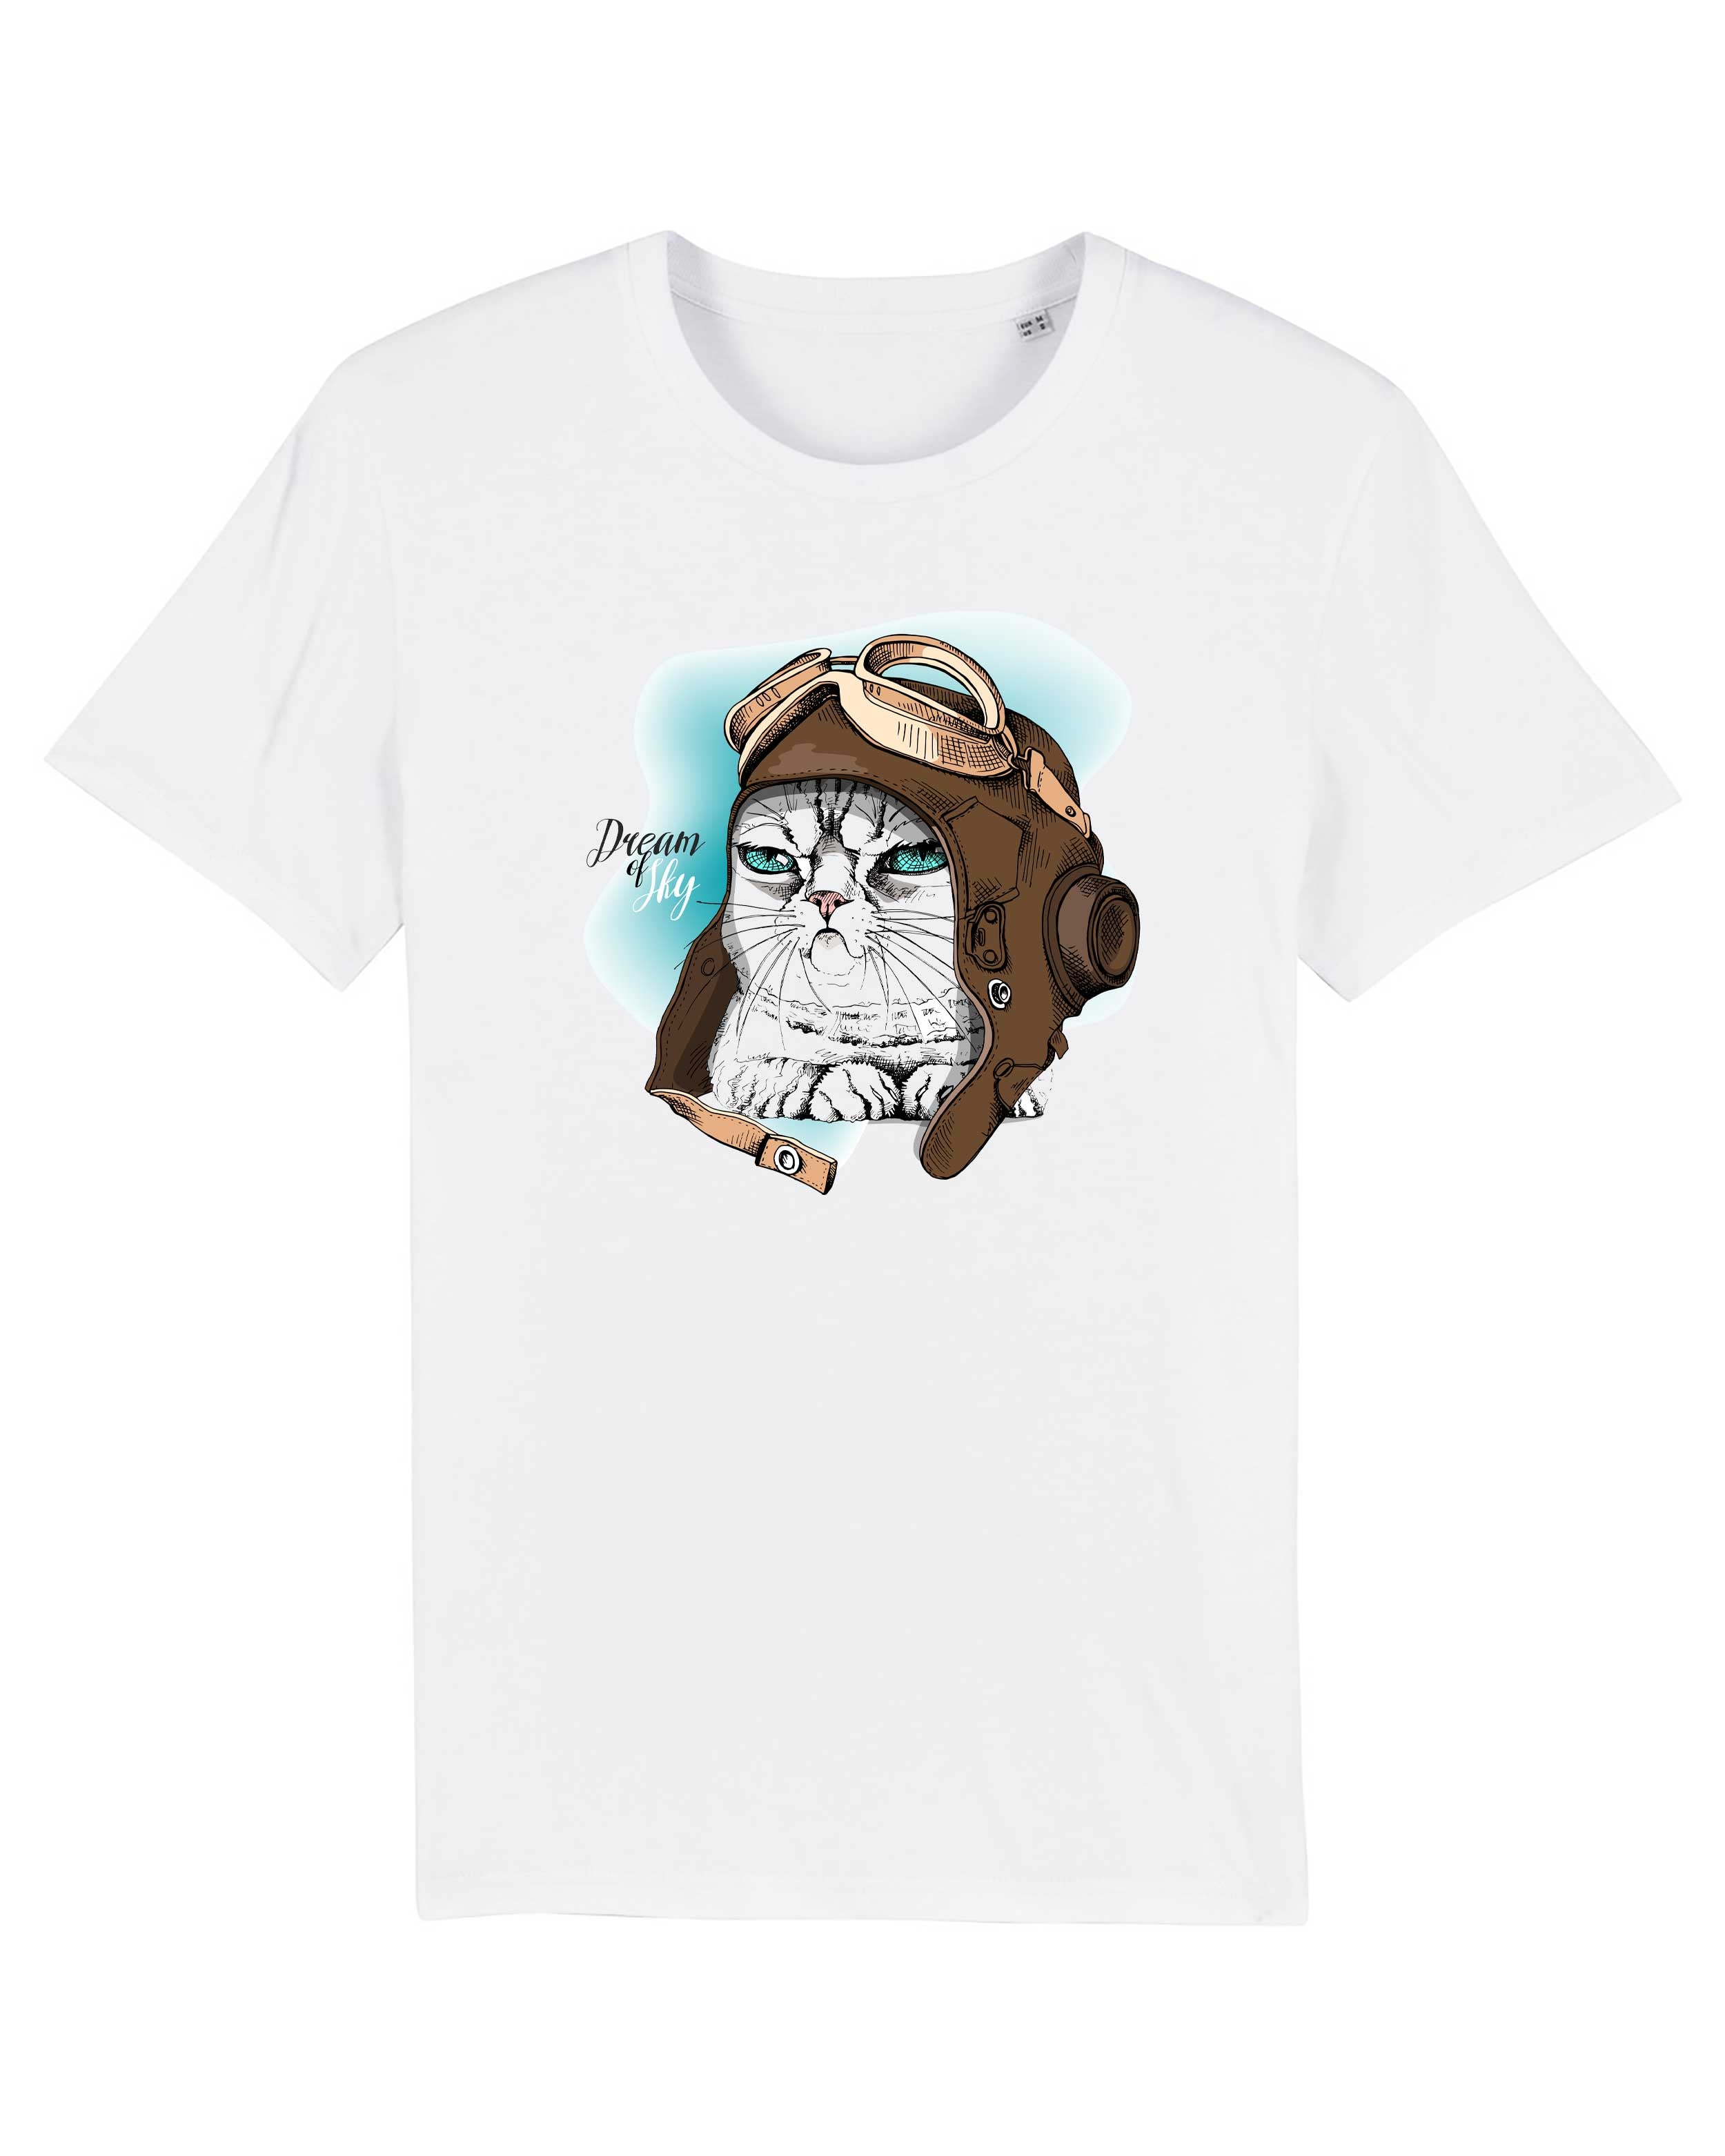 T-Shirt Dream of Sky Katze, Bio-Baumwolle, Unisex, Damen, Kids